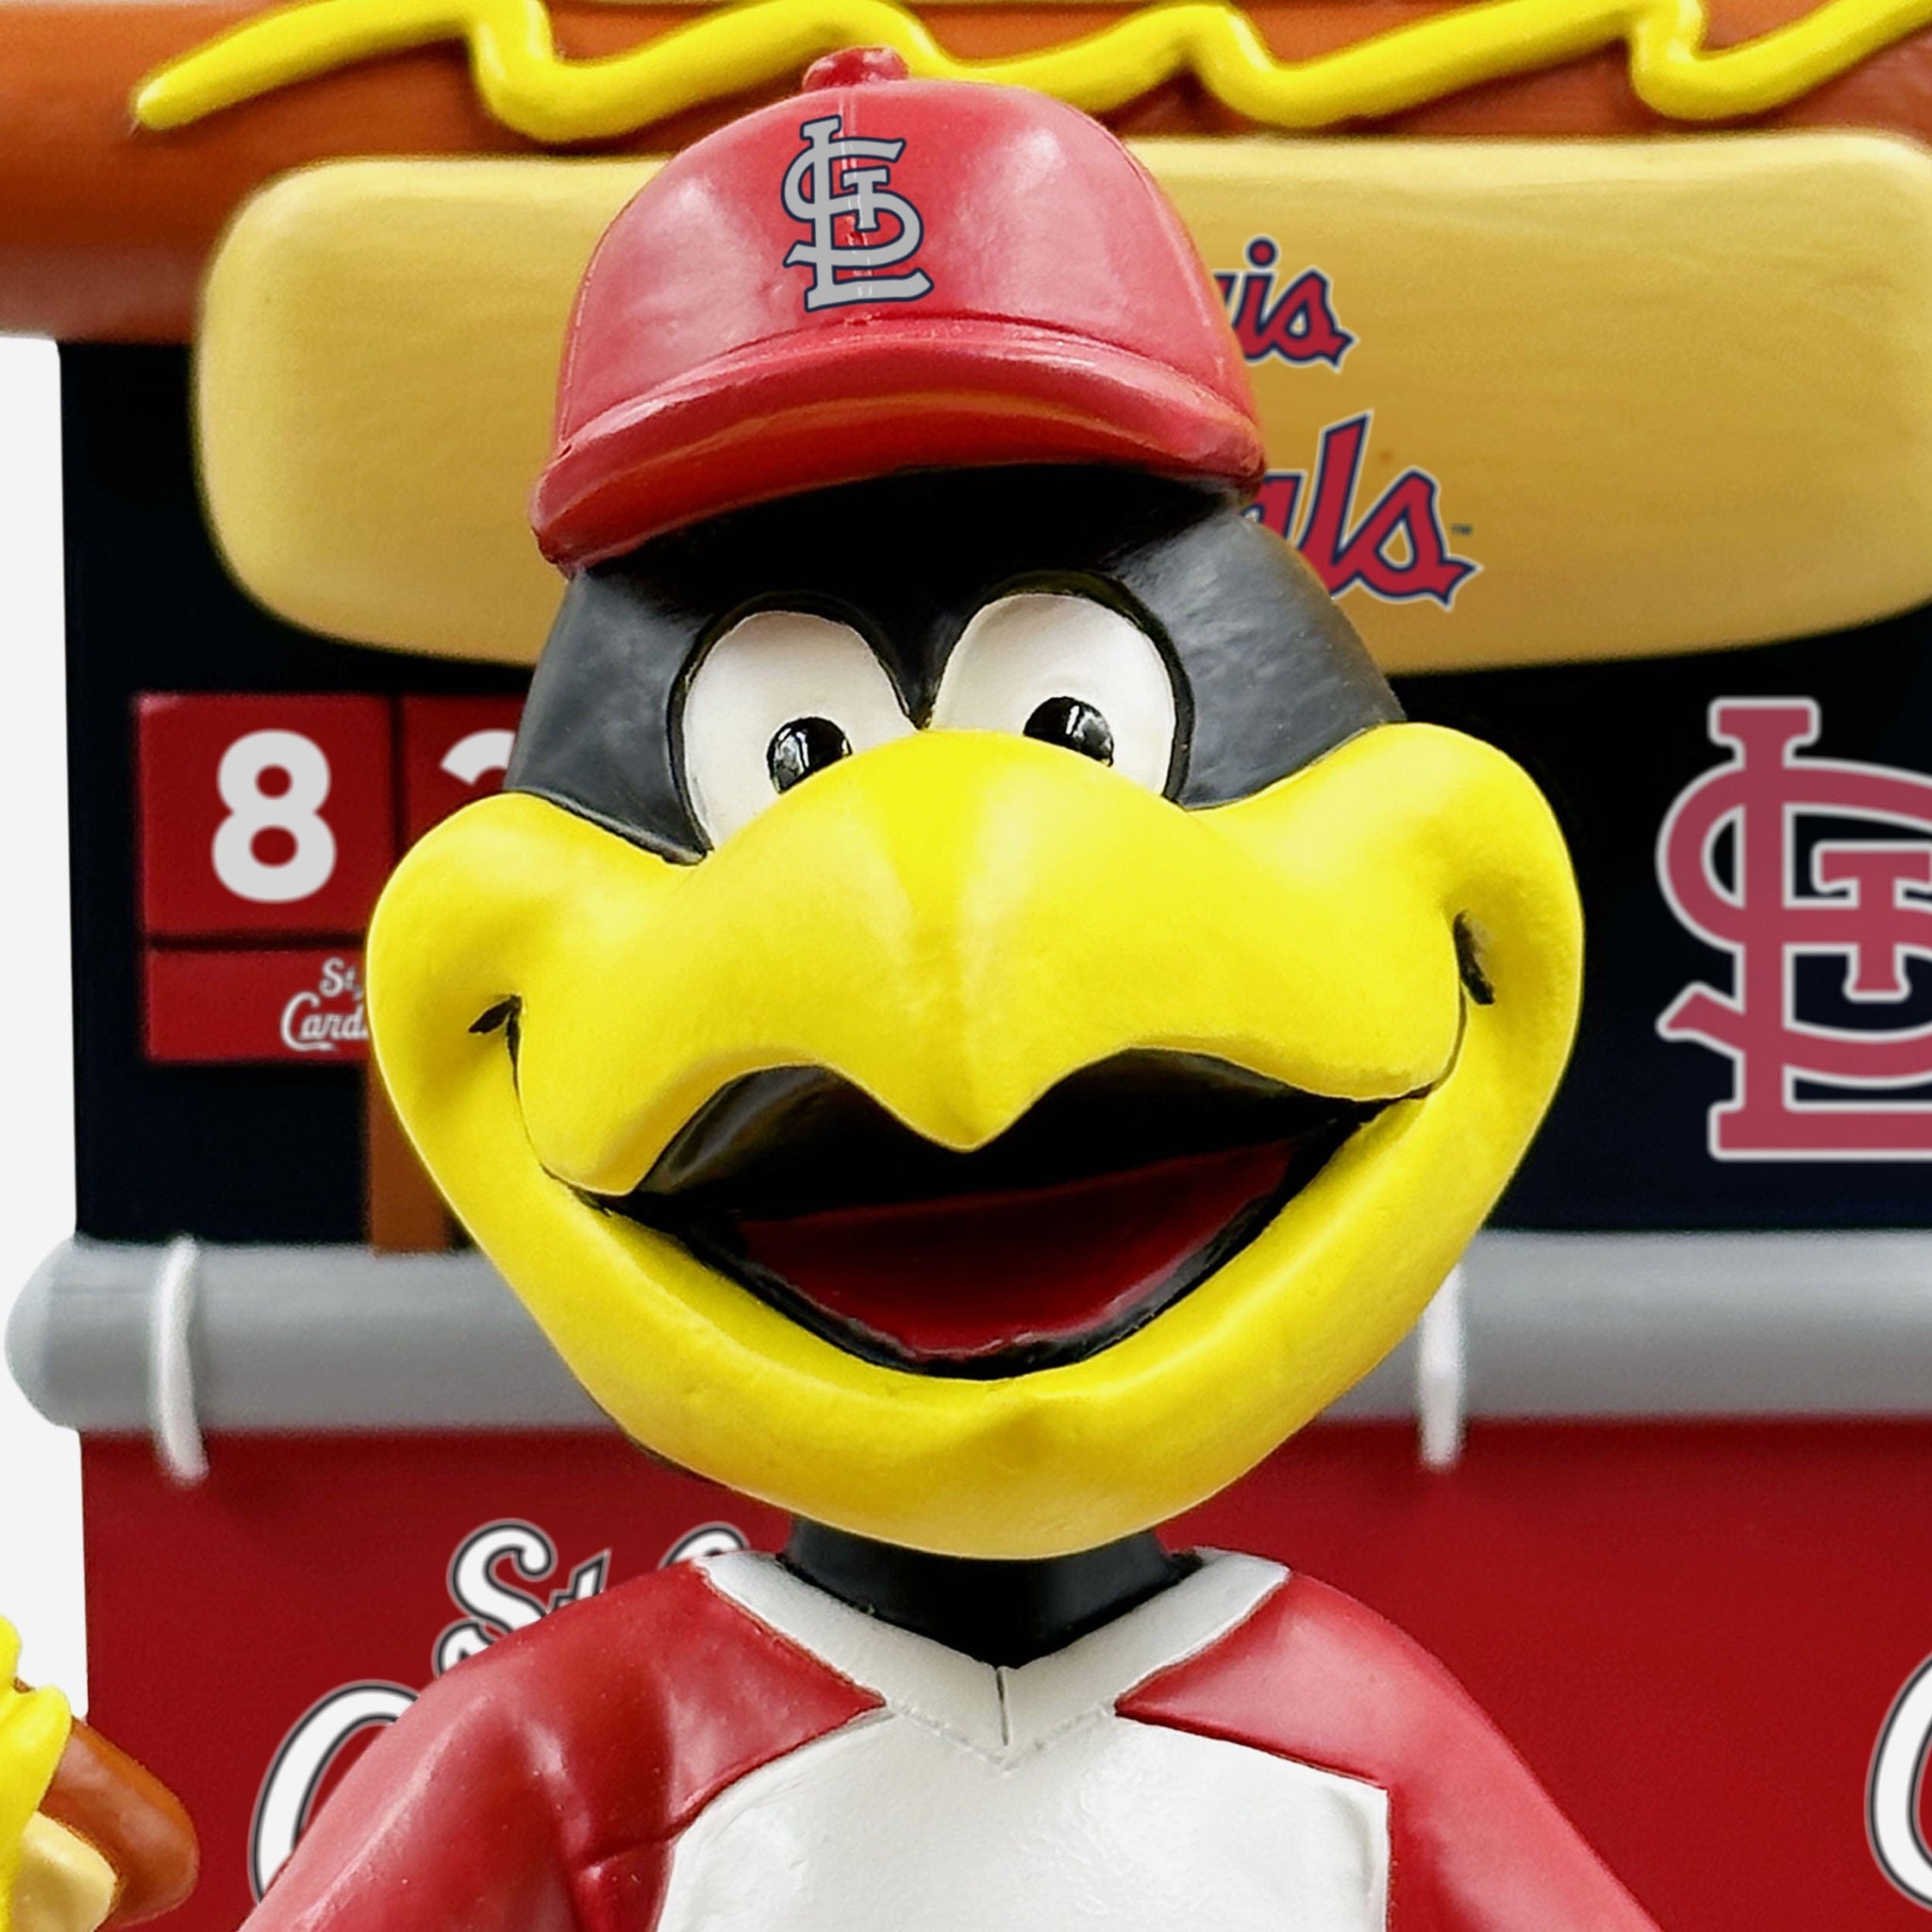 Fredbird St Louis Cardinals Hot Dog Eating Contest Mascot Bobblehead FOCO